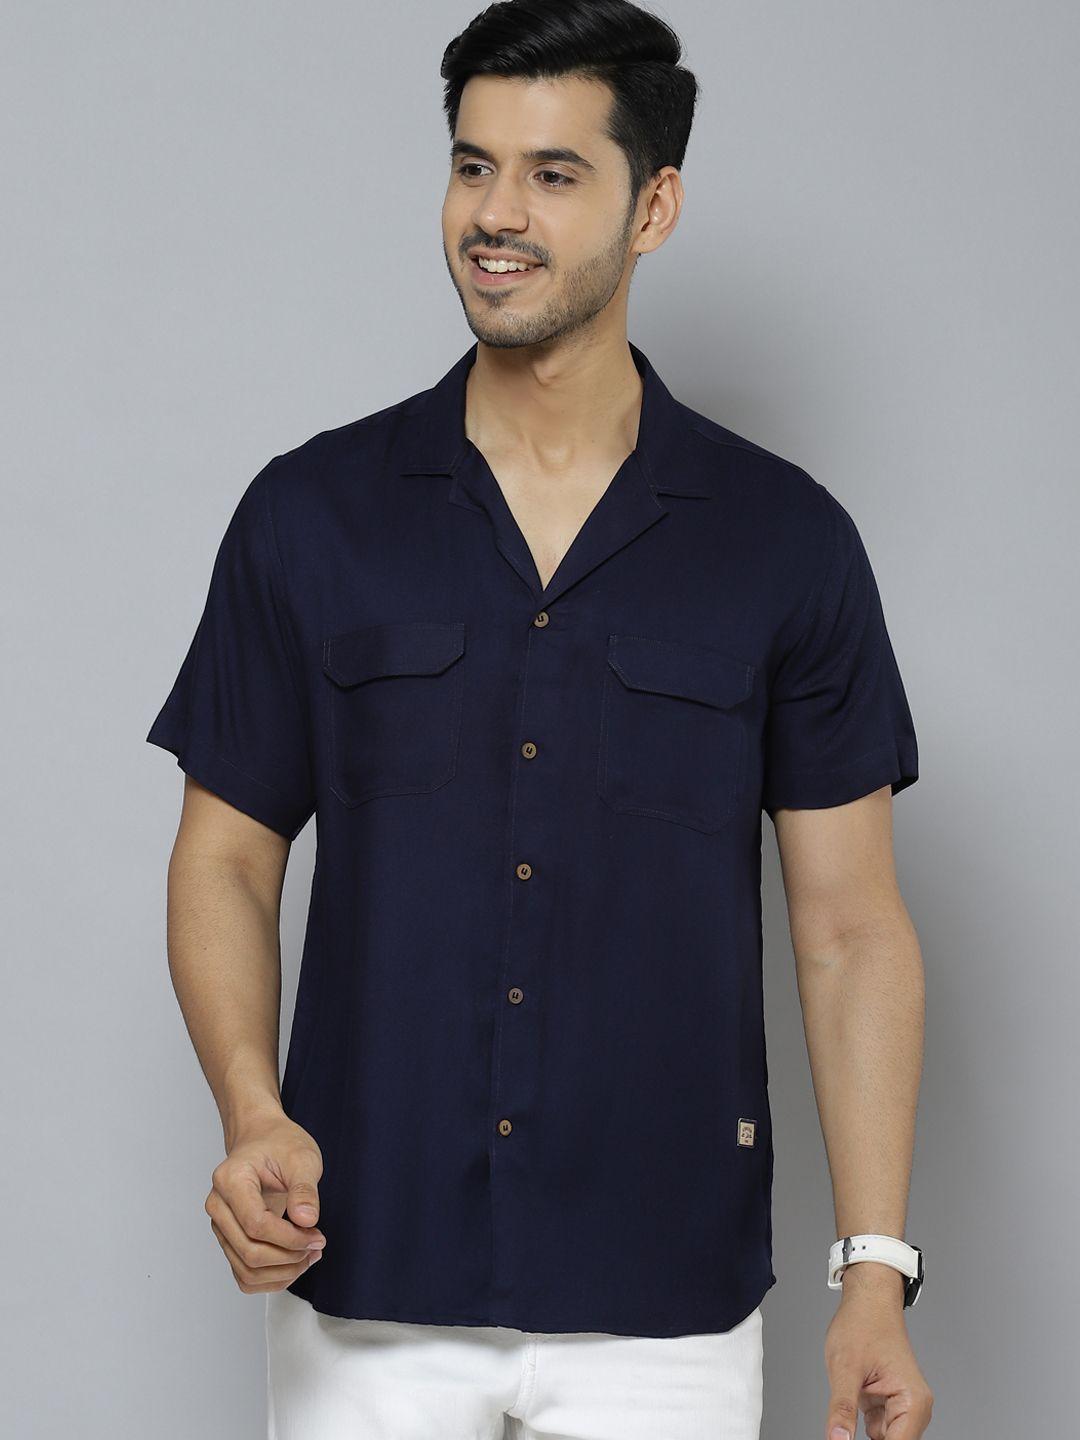 dennison men navy blue solid twill weave smart casual shirt